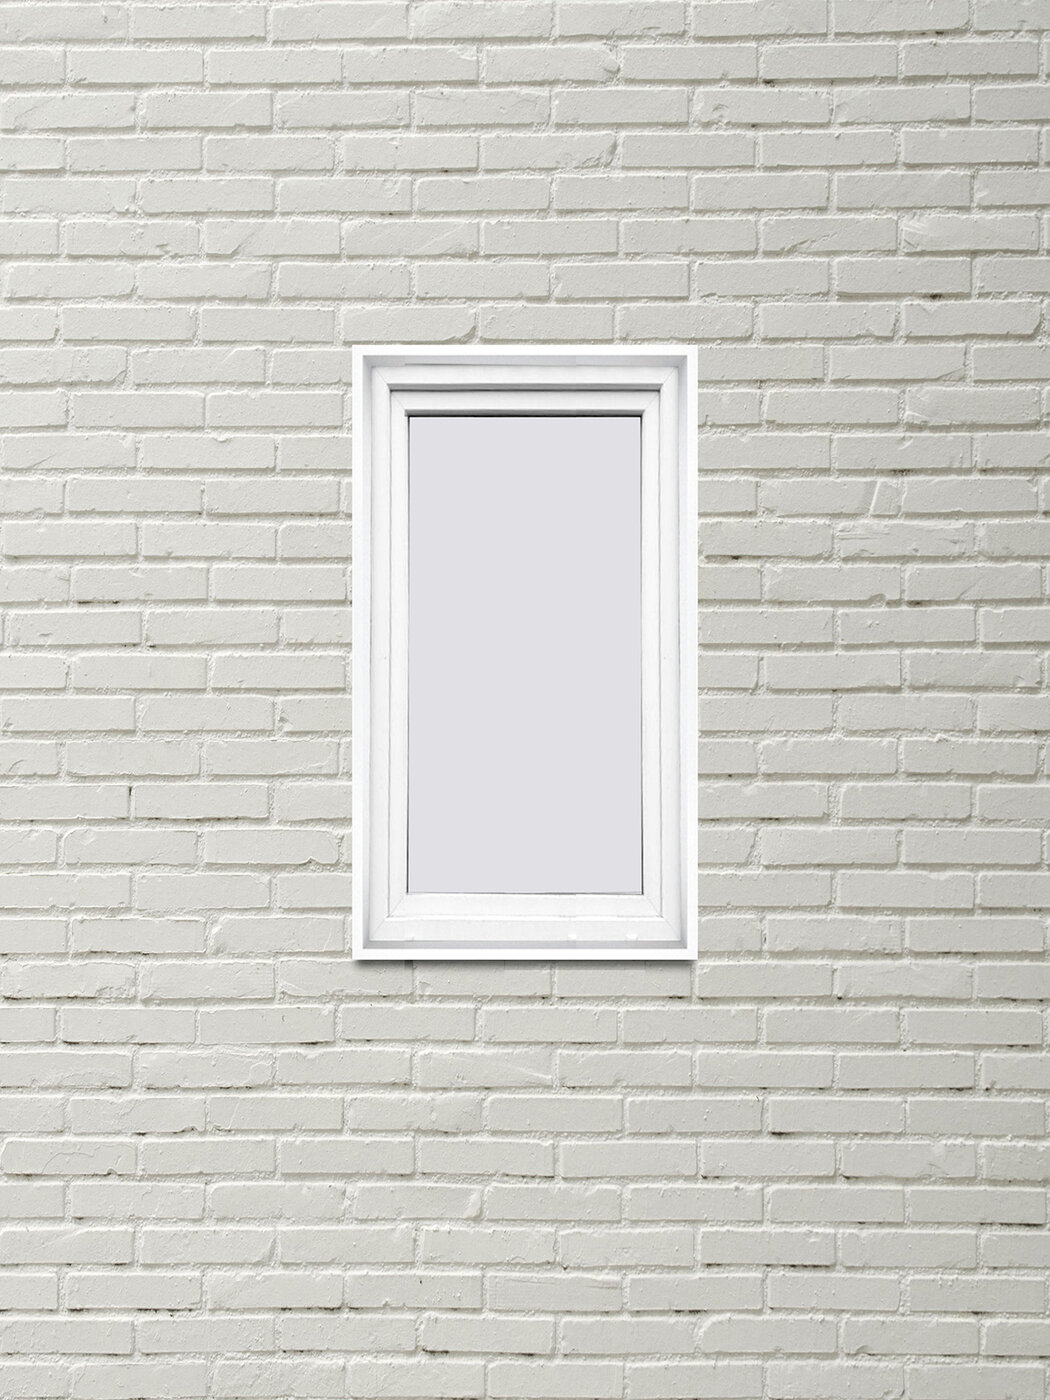 Пленка на окна декоративная White Matte (Solarton). Белая пленка на стекло матовая: 152х100 см.